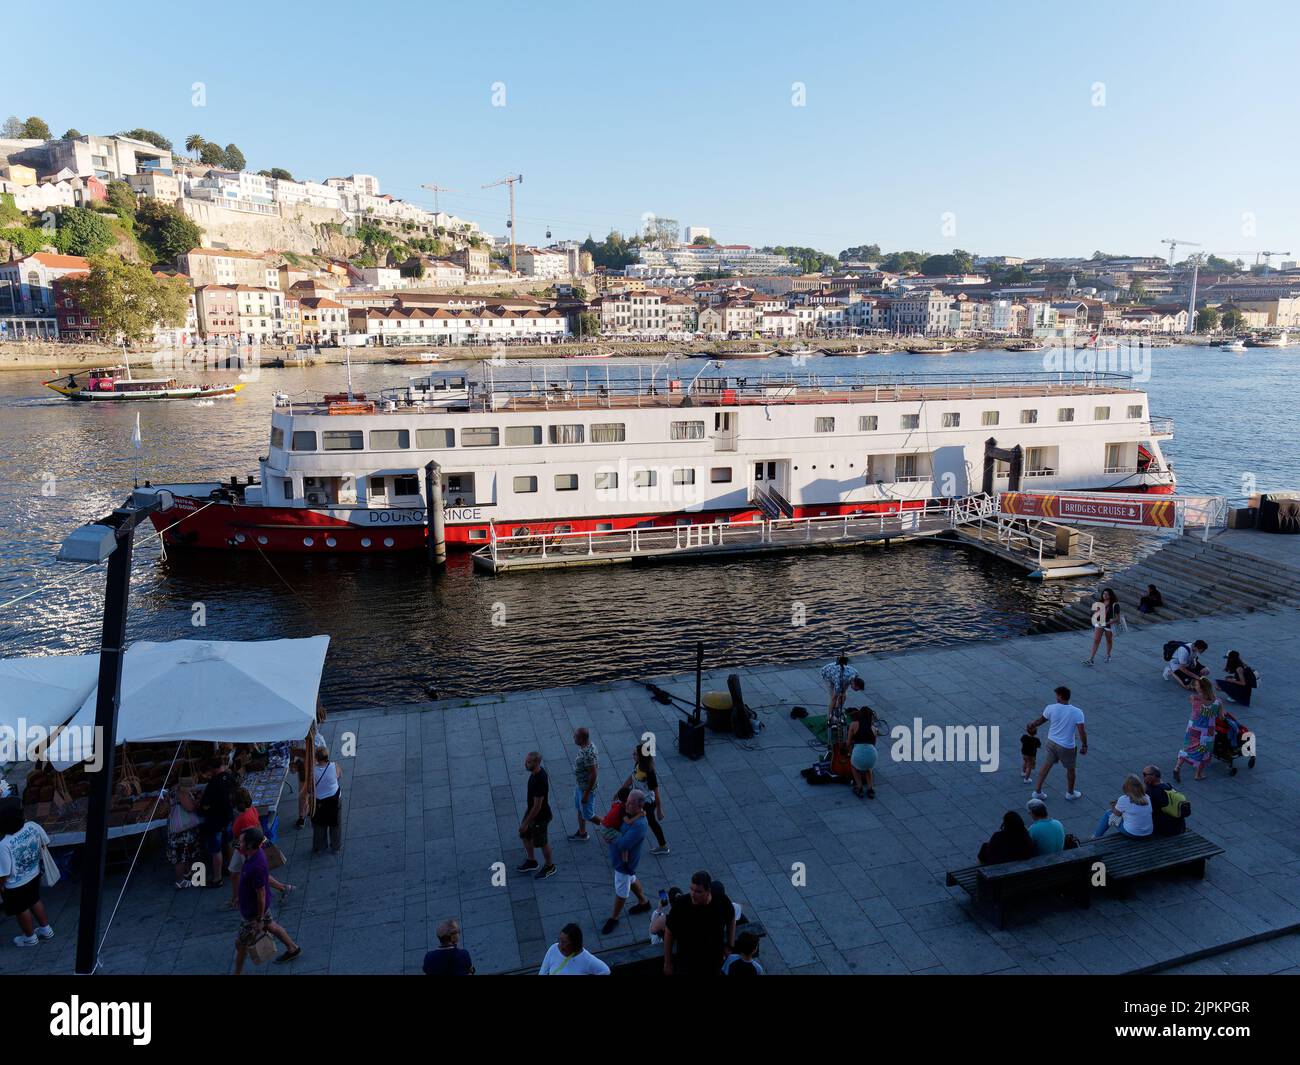 Boat in the River Douro docked at a jetty on in the Riberia district of Porto, Portugal. Vila Nova de Gaia is in the background. Stock Photo